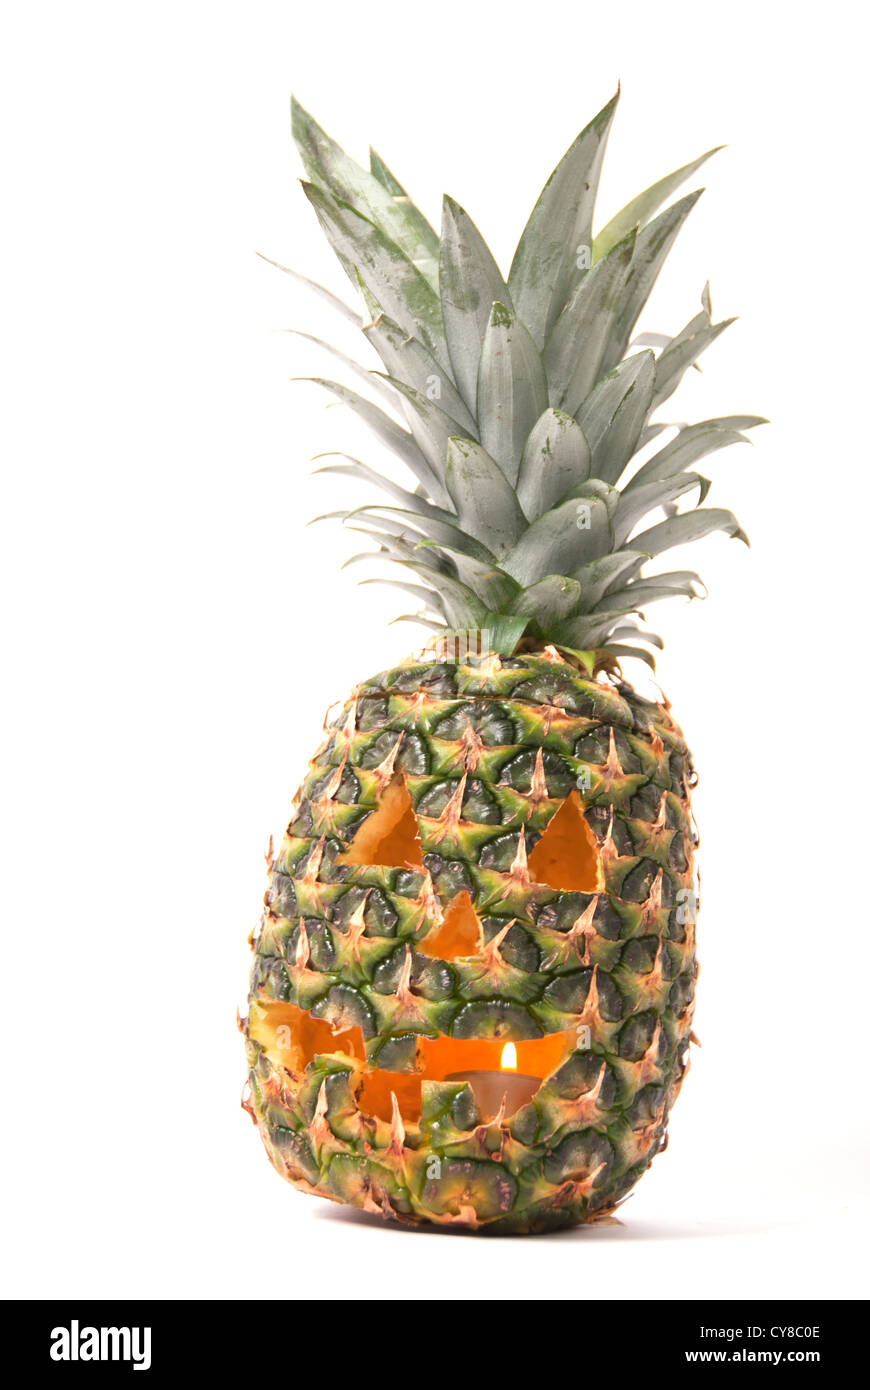 Tropical Jack-o-lantern pineapple Halloween decoration Stock Photo